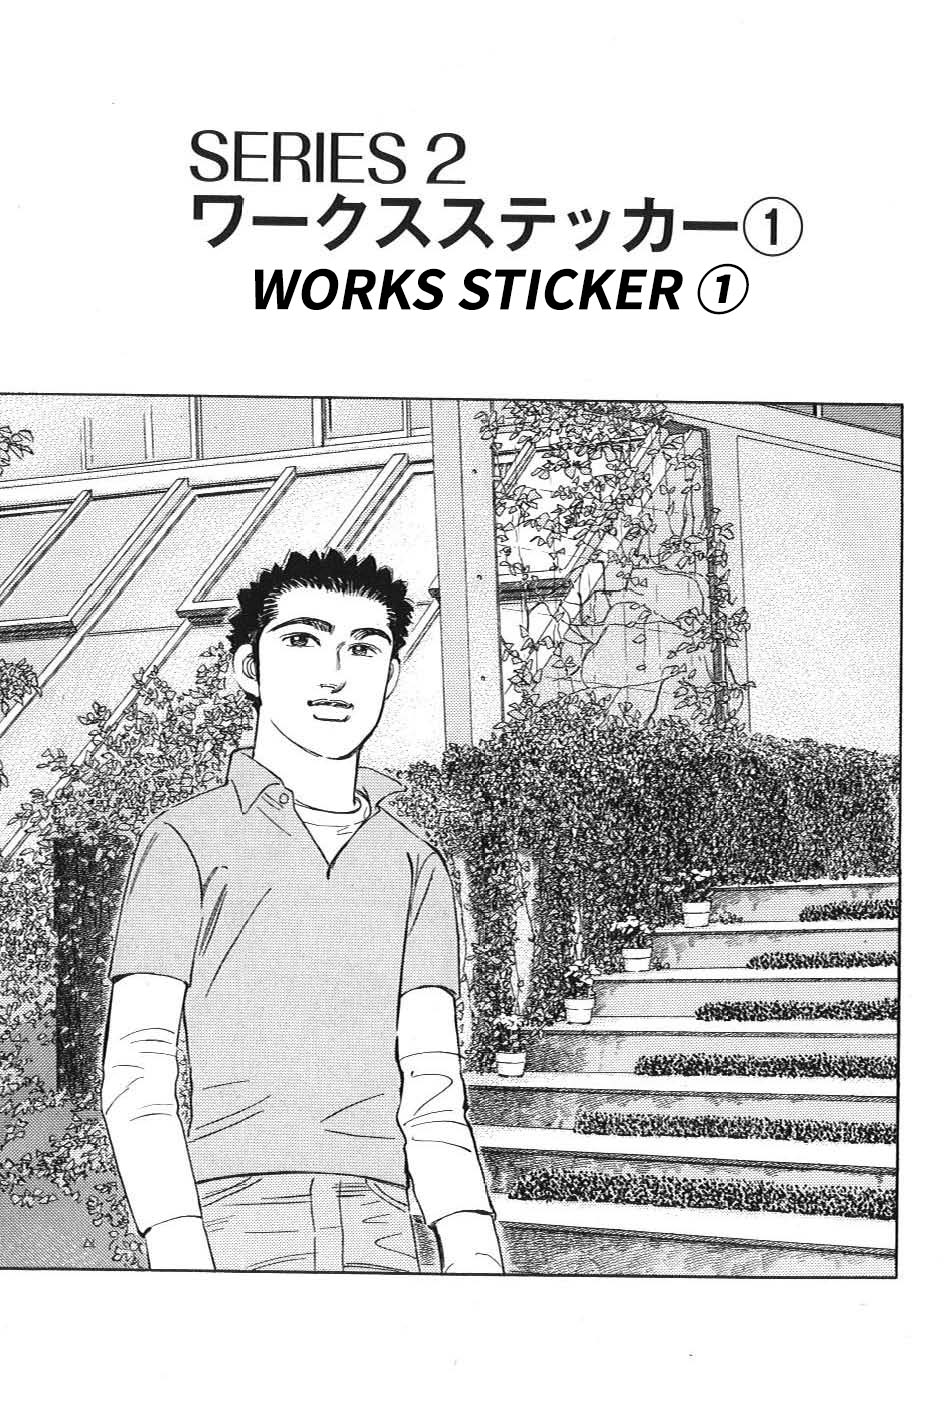 Wangan Midnight: C1 Runner Vol.1 Chapter 3: Works Sticker ① - Picture 1